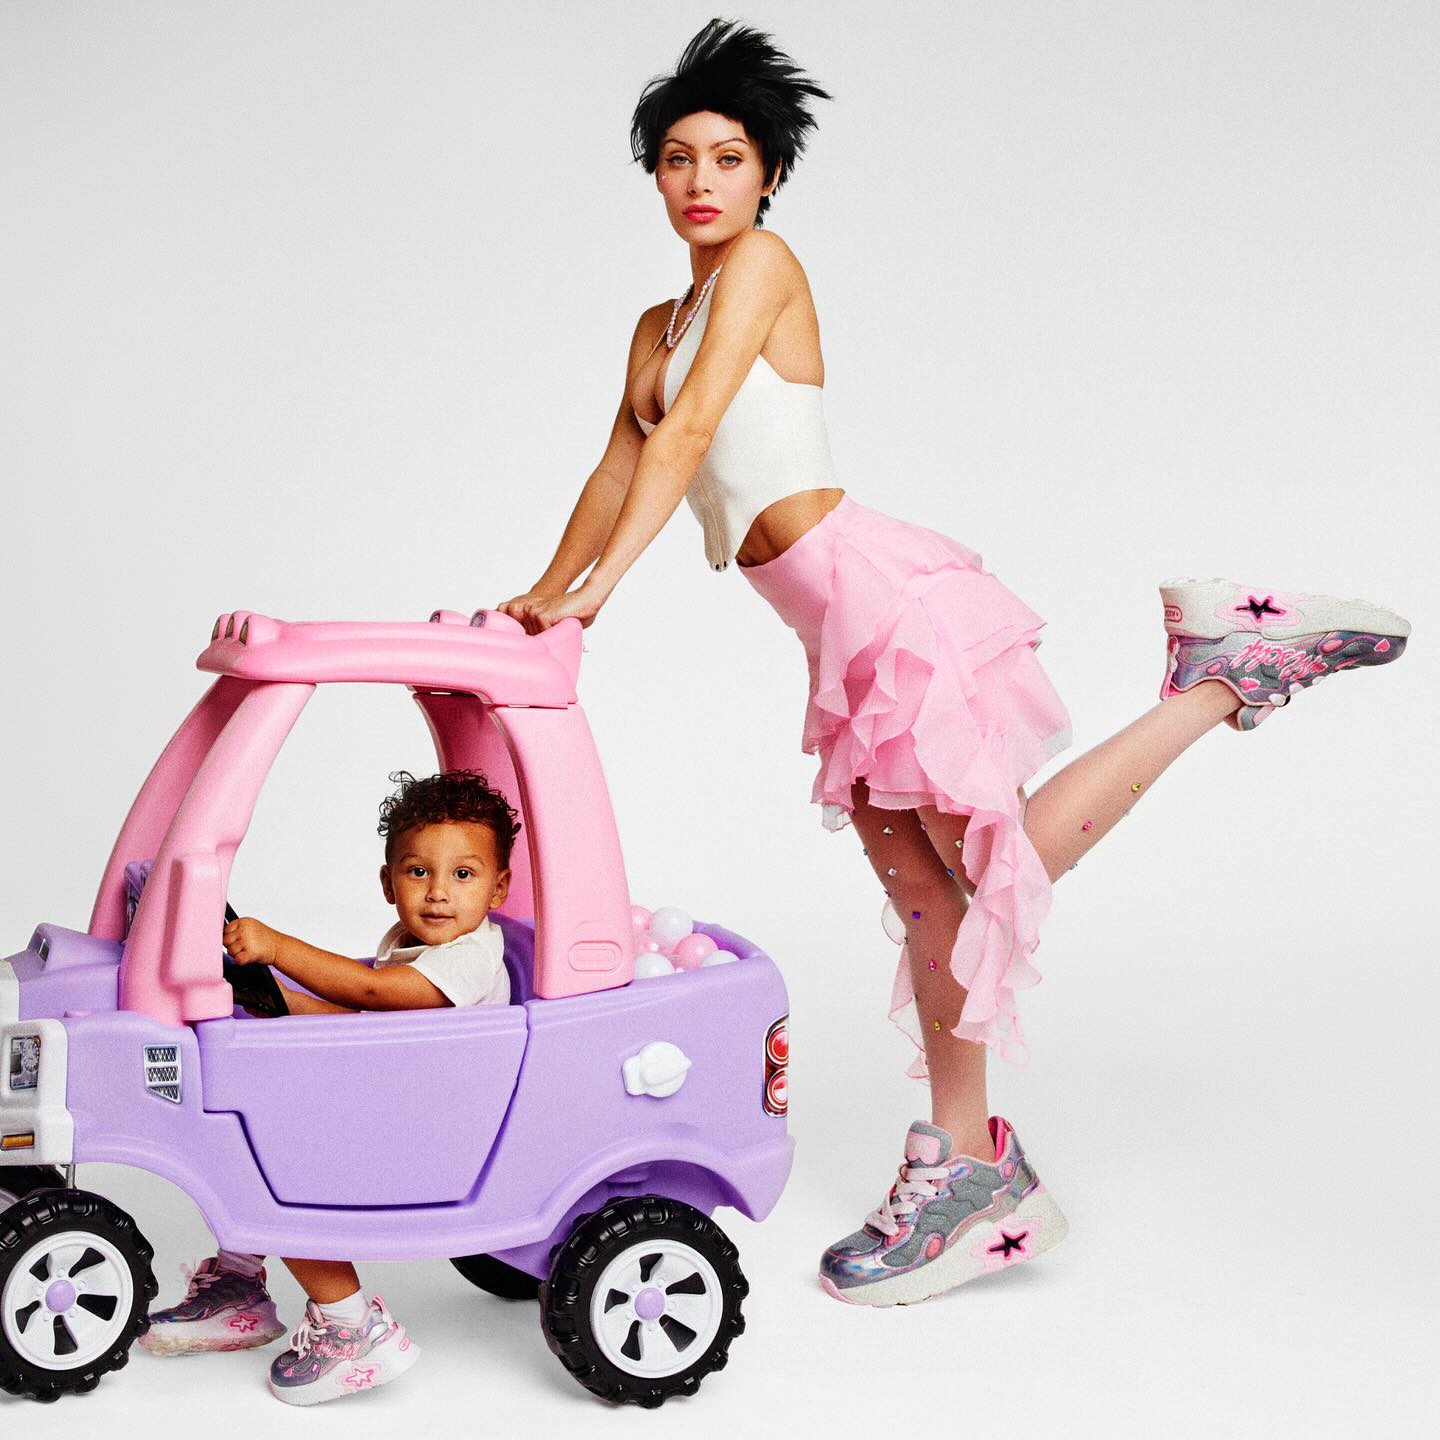  MSCHF Super Baby Shoe Lana Rhoades Lookbook Release Date